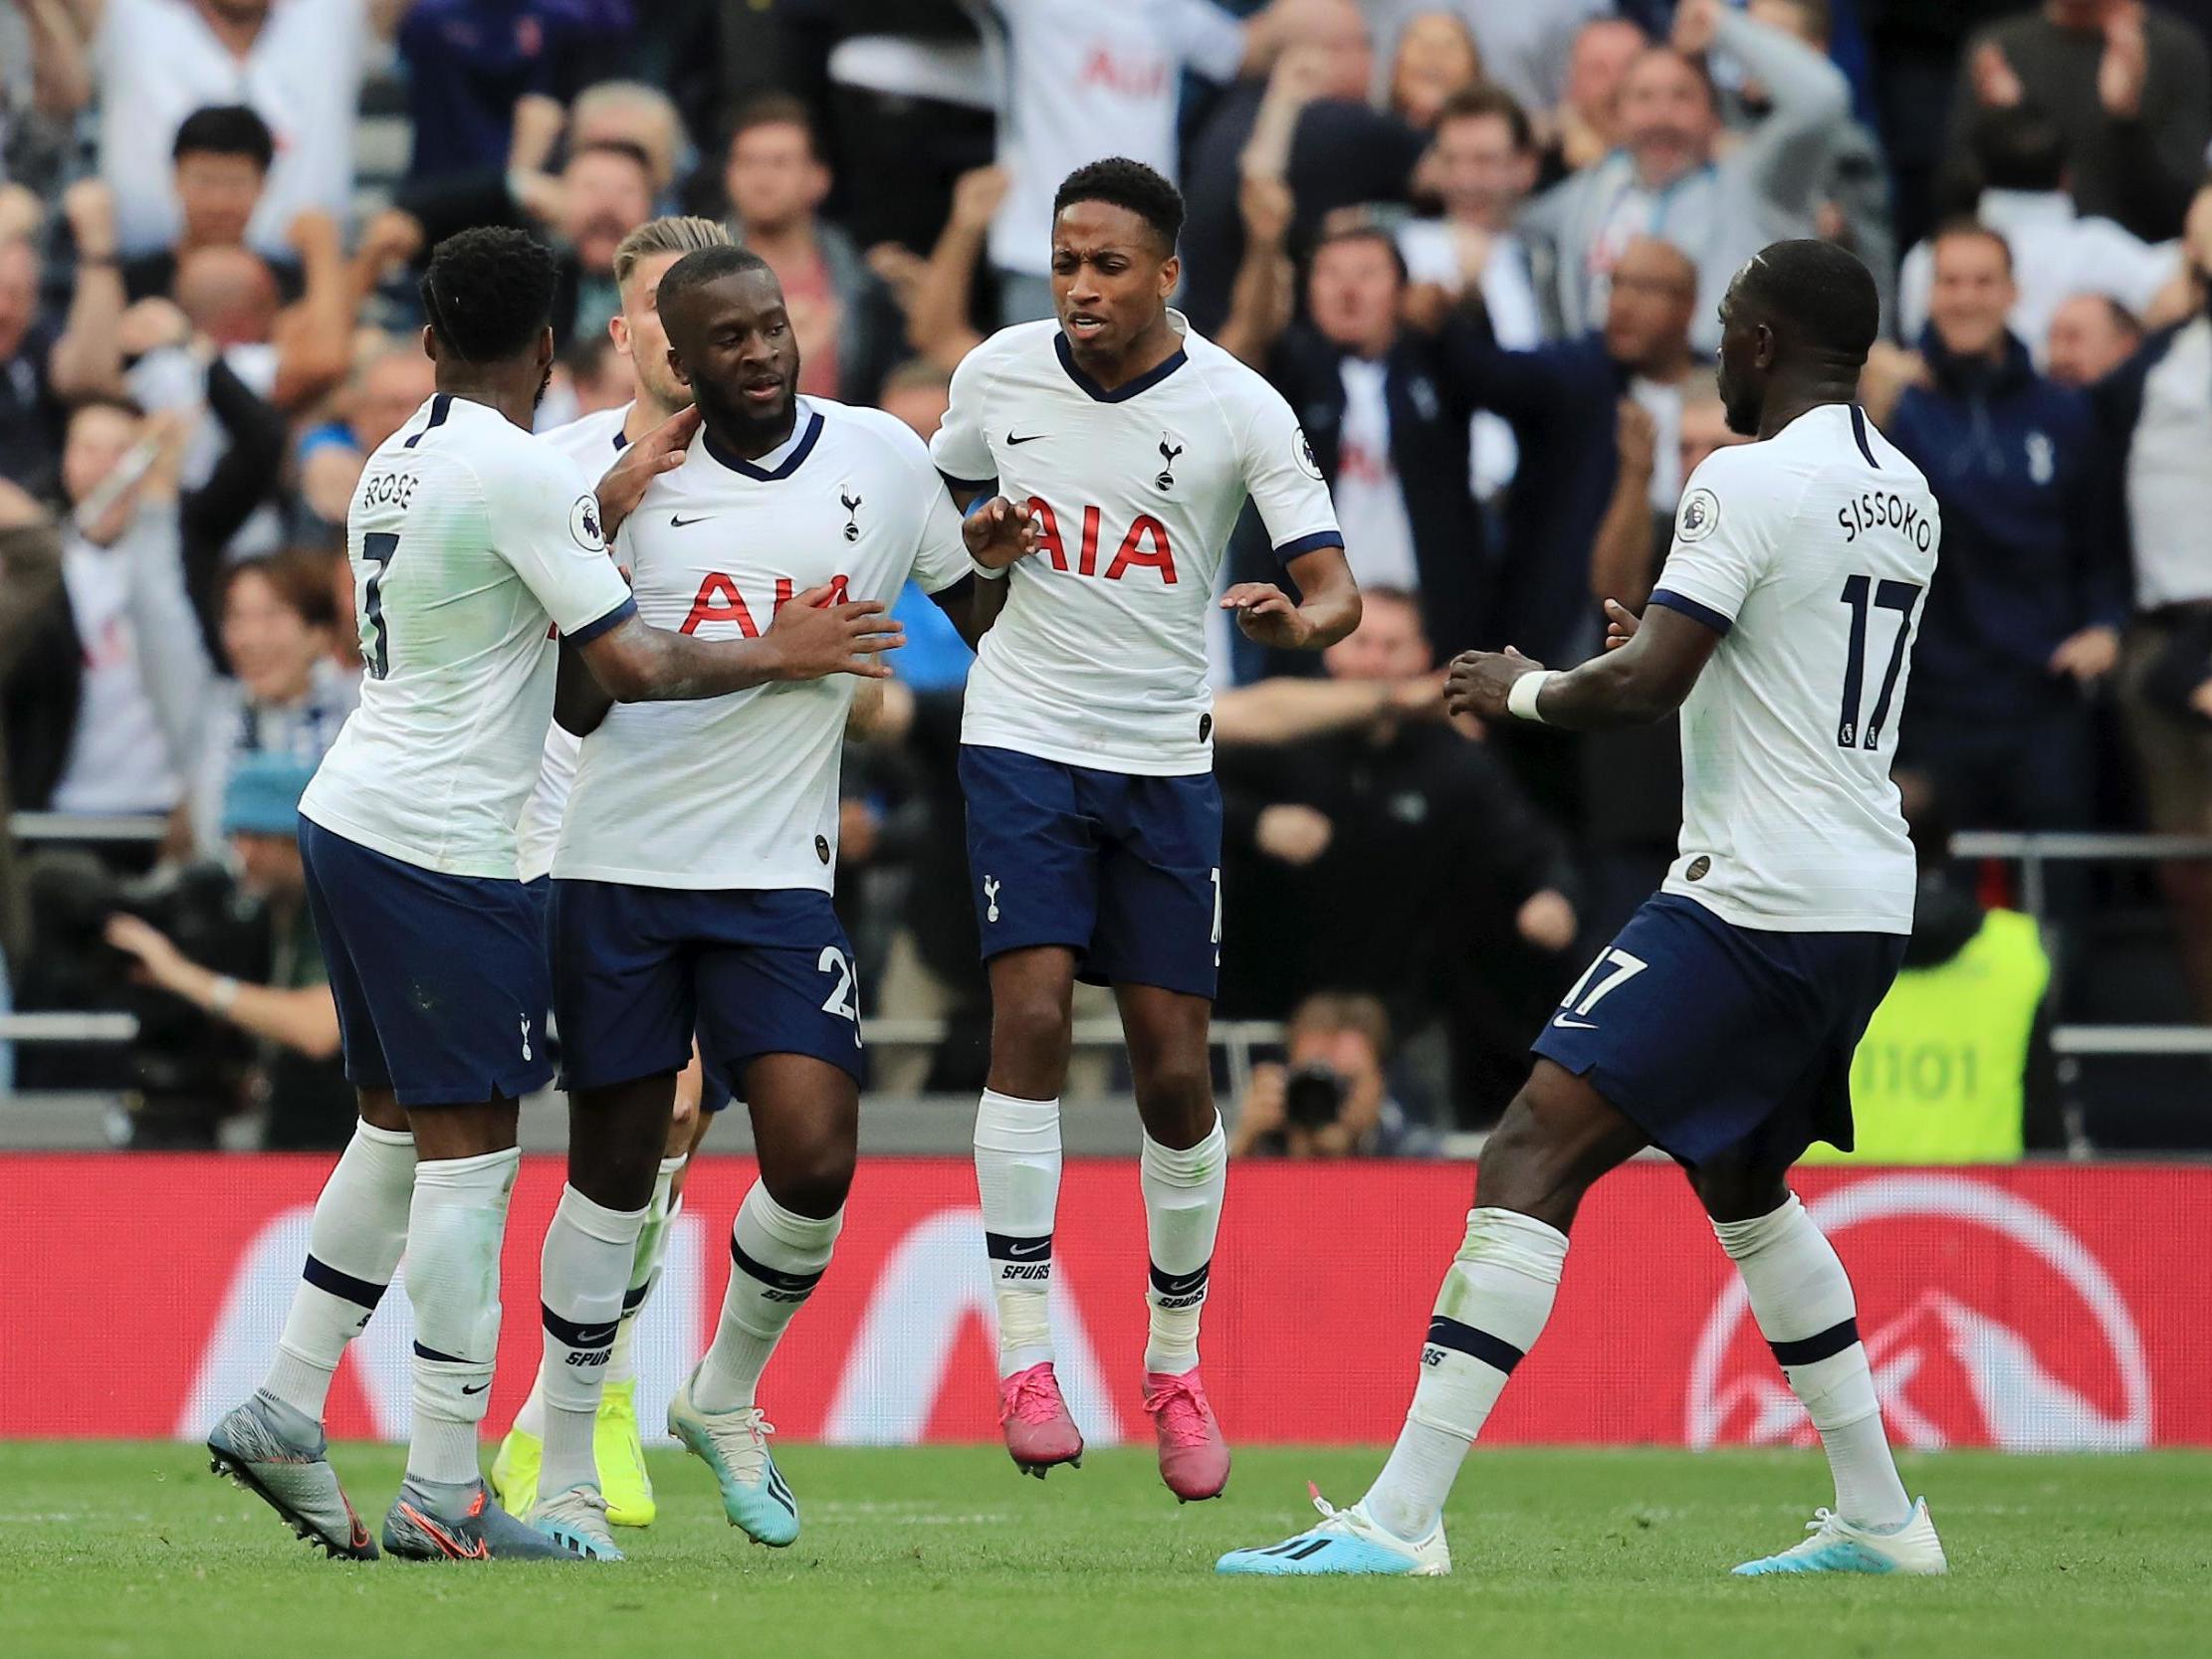 Tottenham vs Aston Villa result: Harry Kane goals sink Premier League newcomers in tight contest